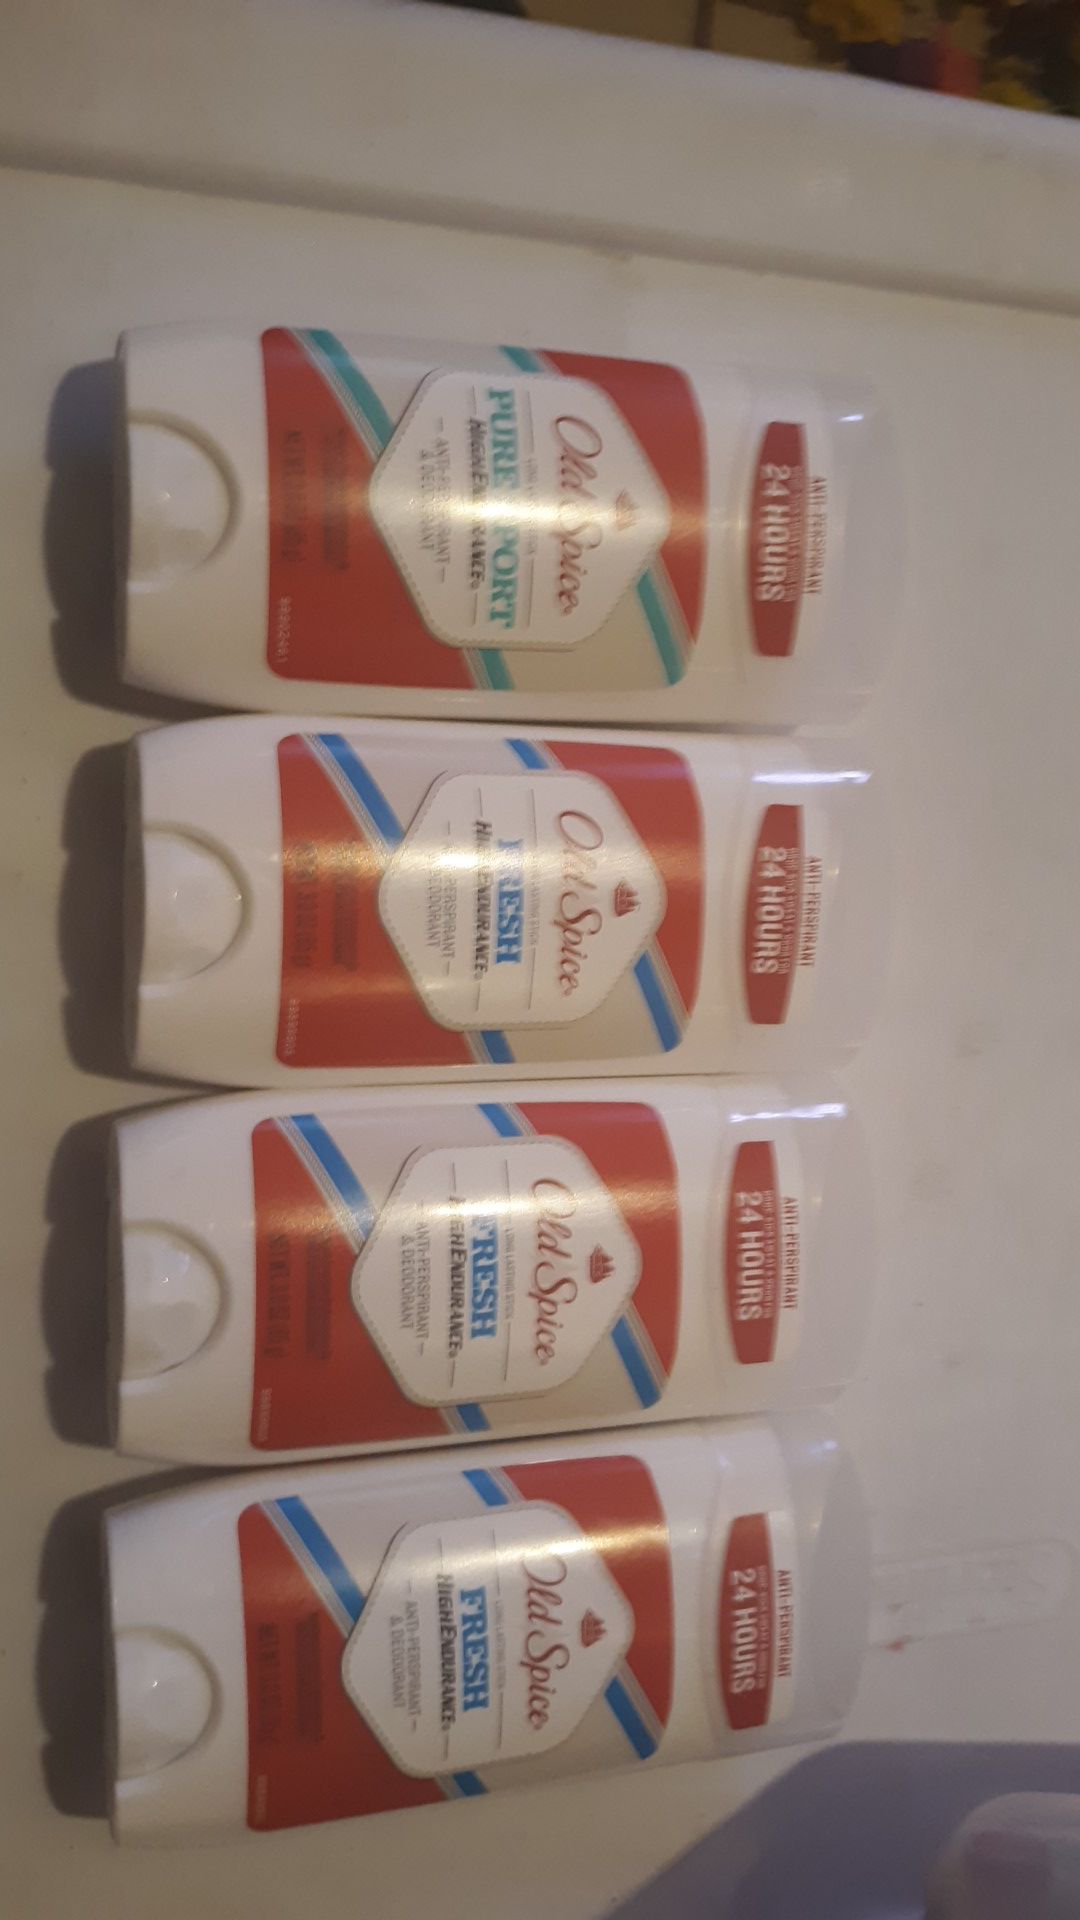 Old spice deodorants $2.50 each